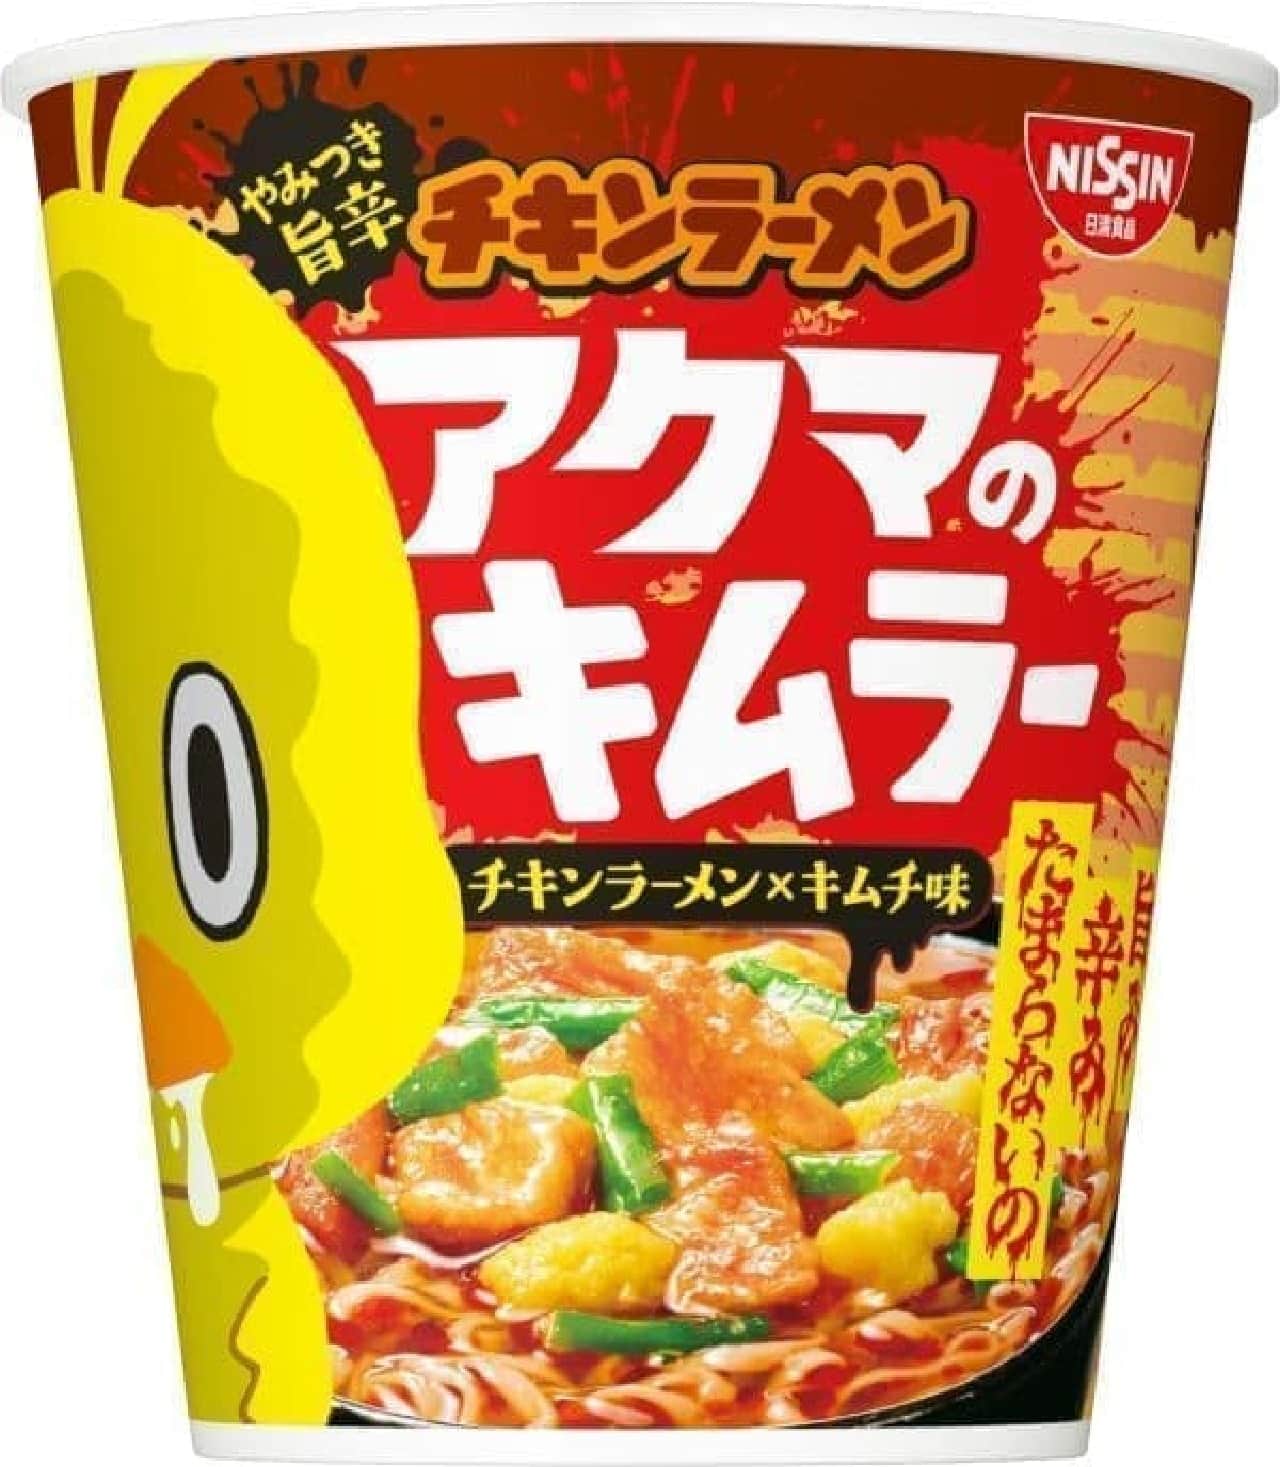 Nissin Foods "Chicken Ramen Big Cup Akuma Kimra"